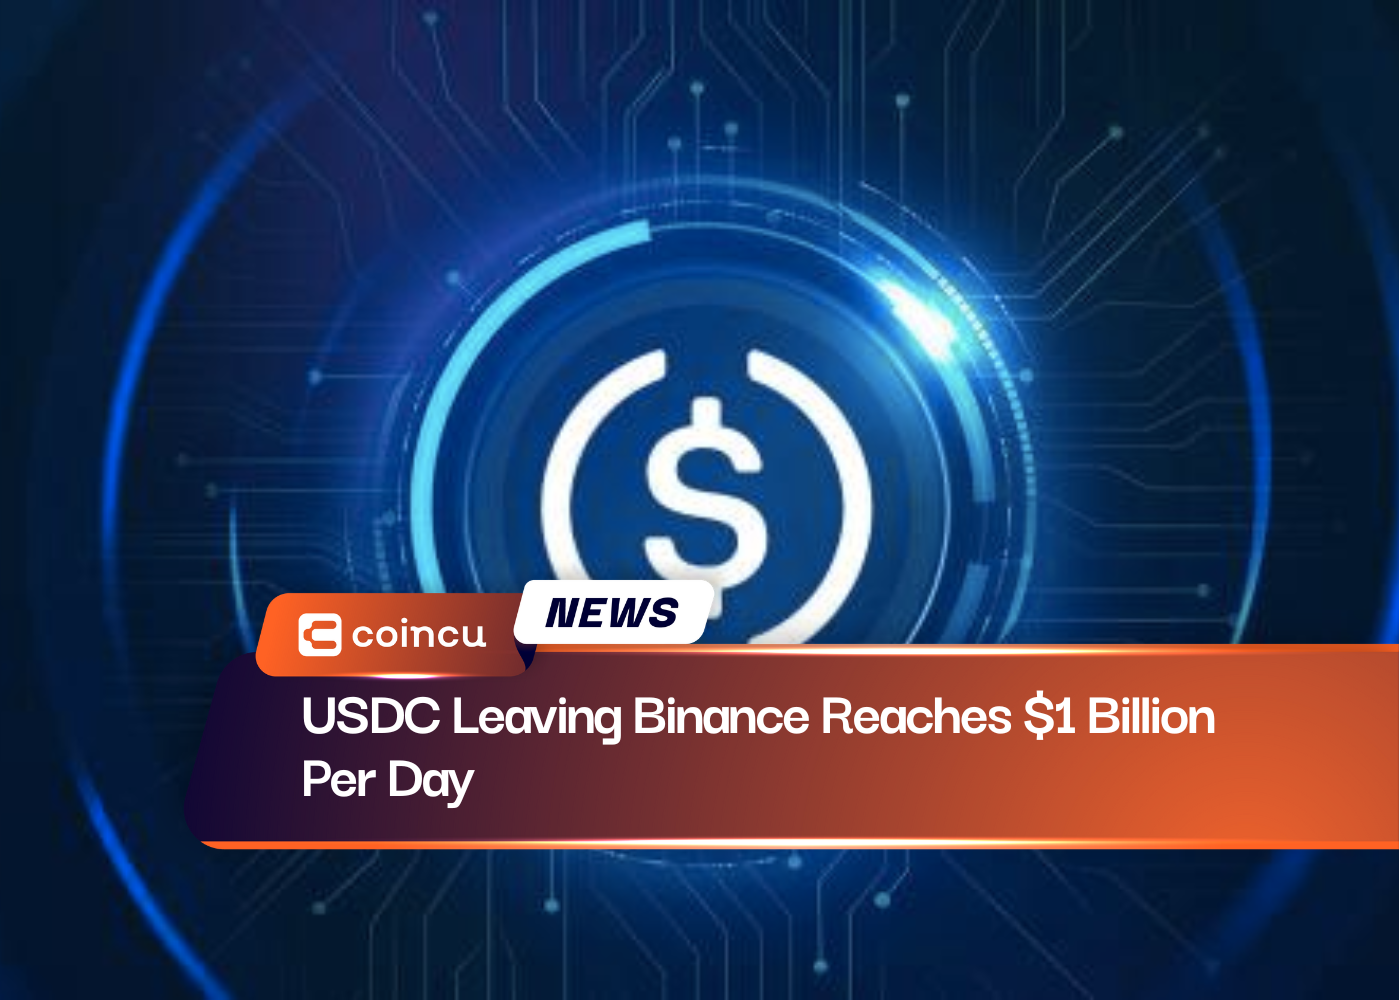 USDC Leaving Binance Reaches $1 Billion Per Day